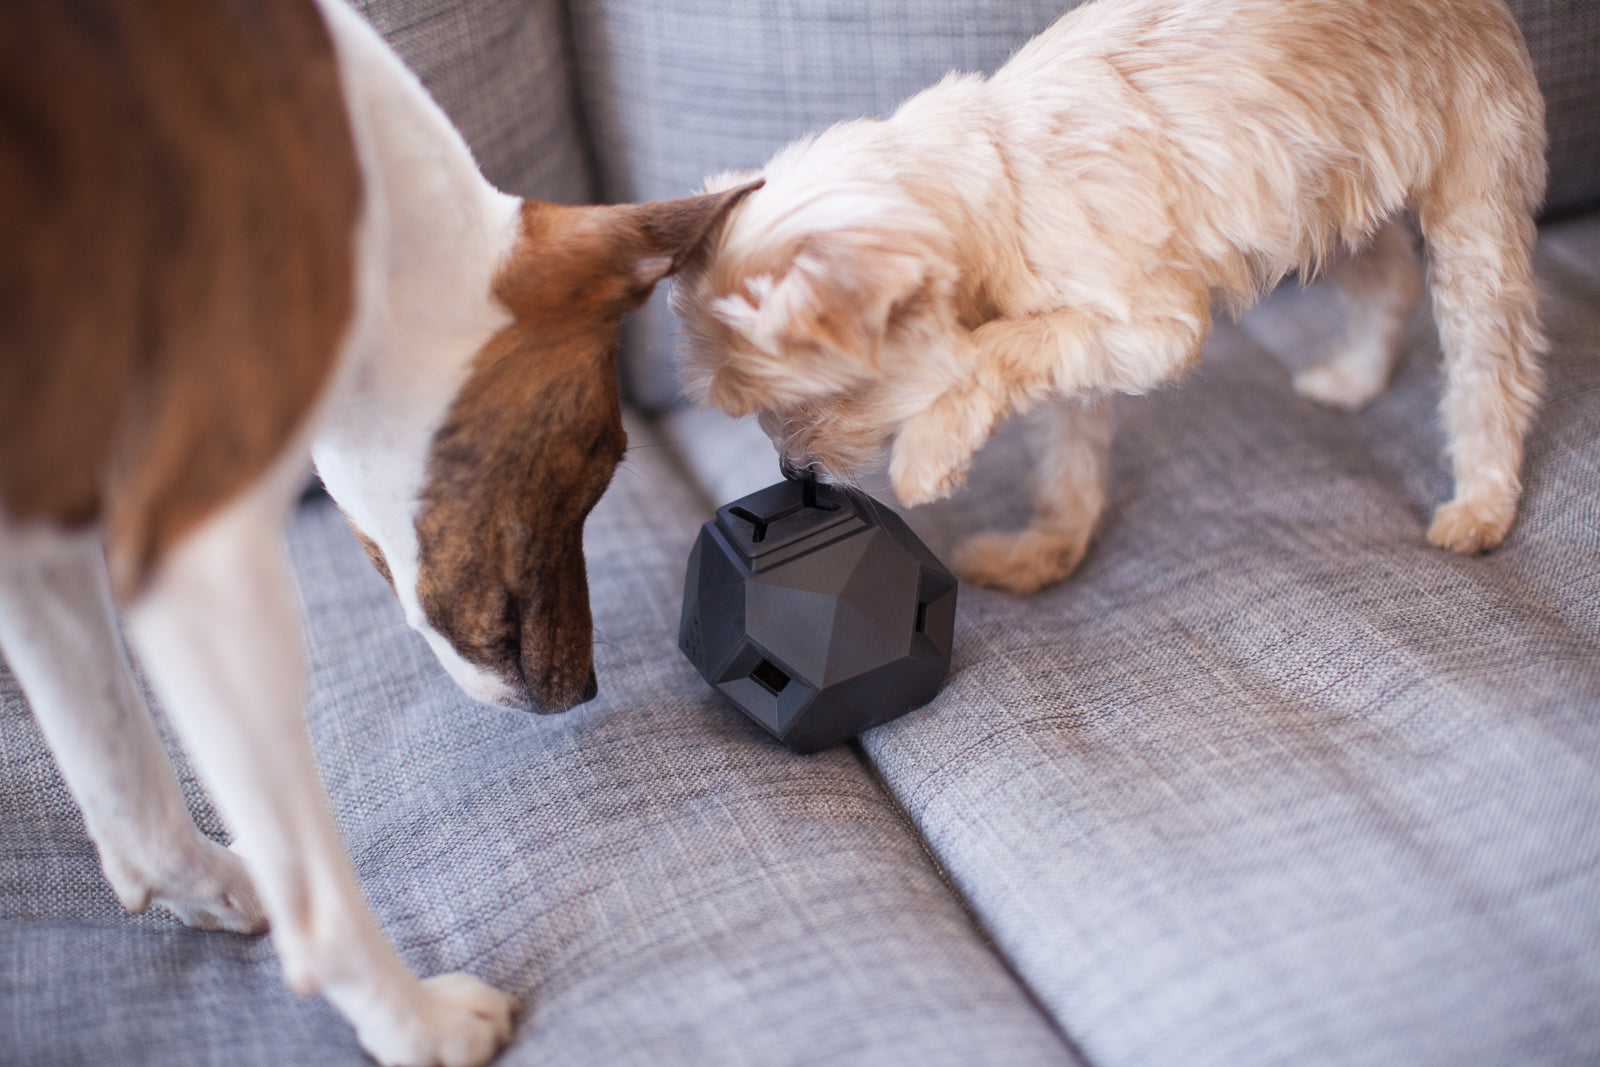 Treat Dispensing Dog Toys - Interactive Dog Toys-Dispenser Treat